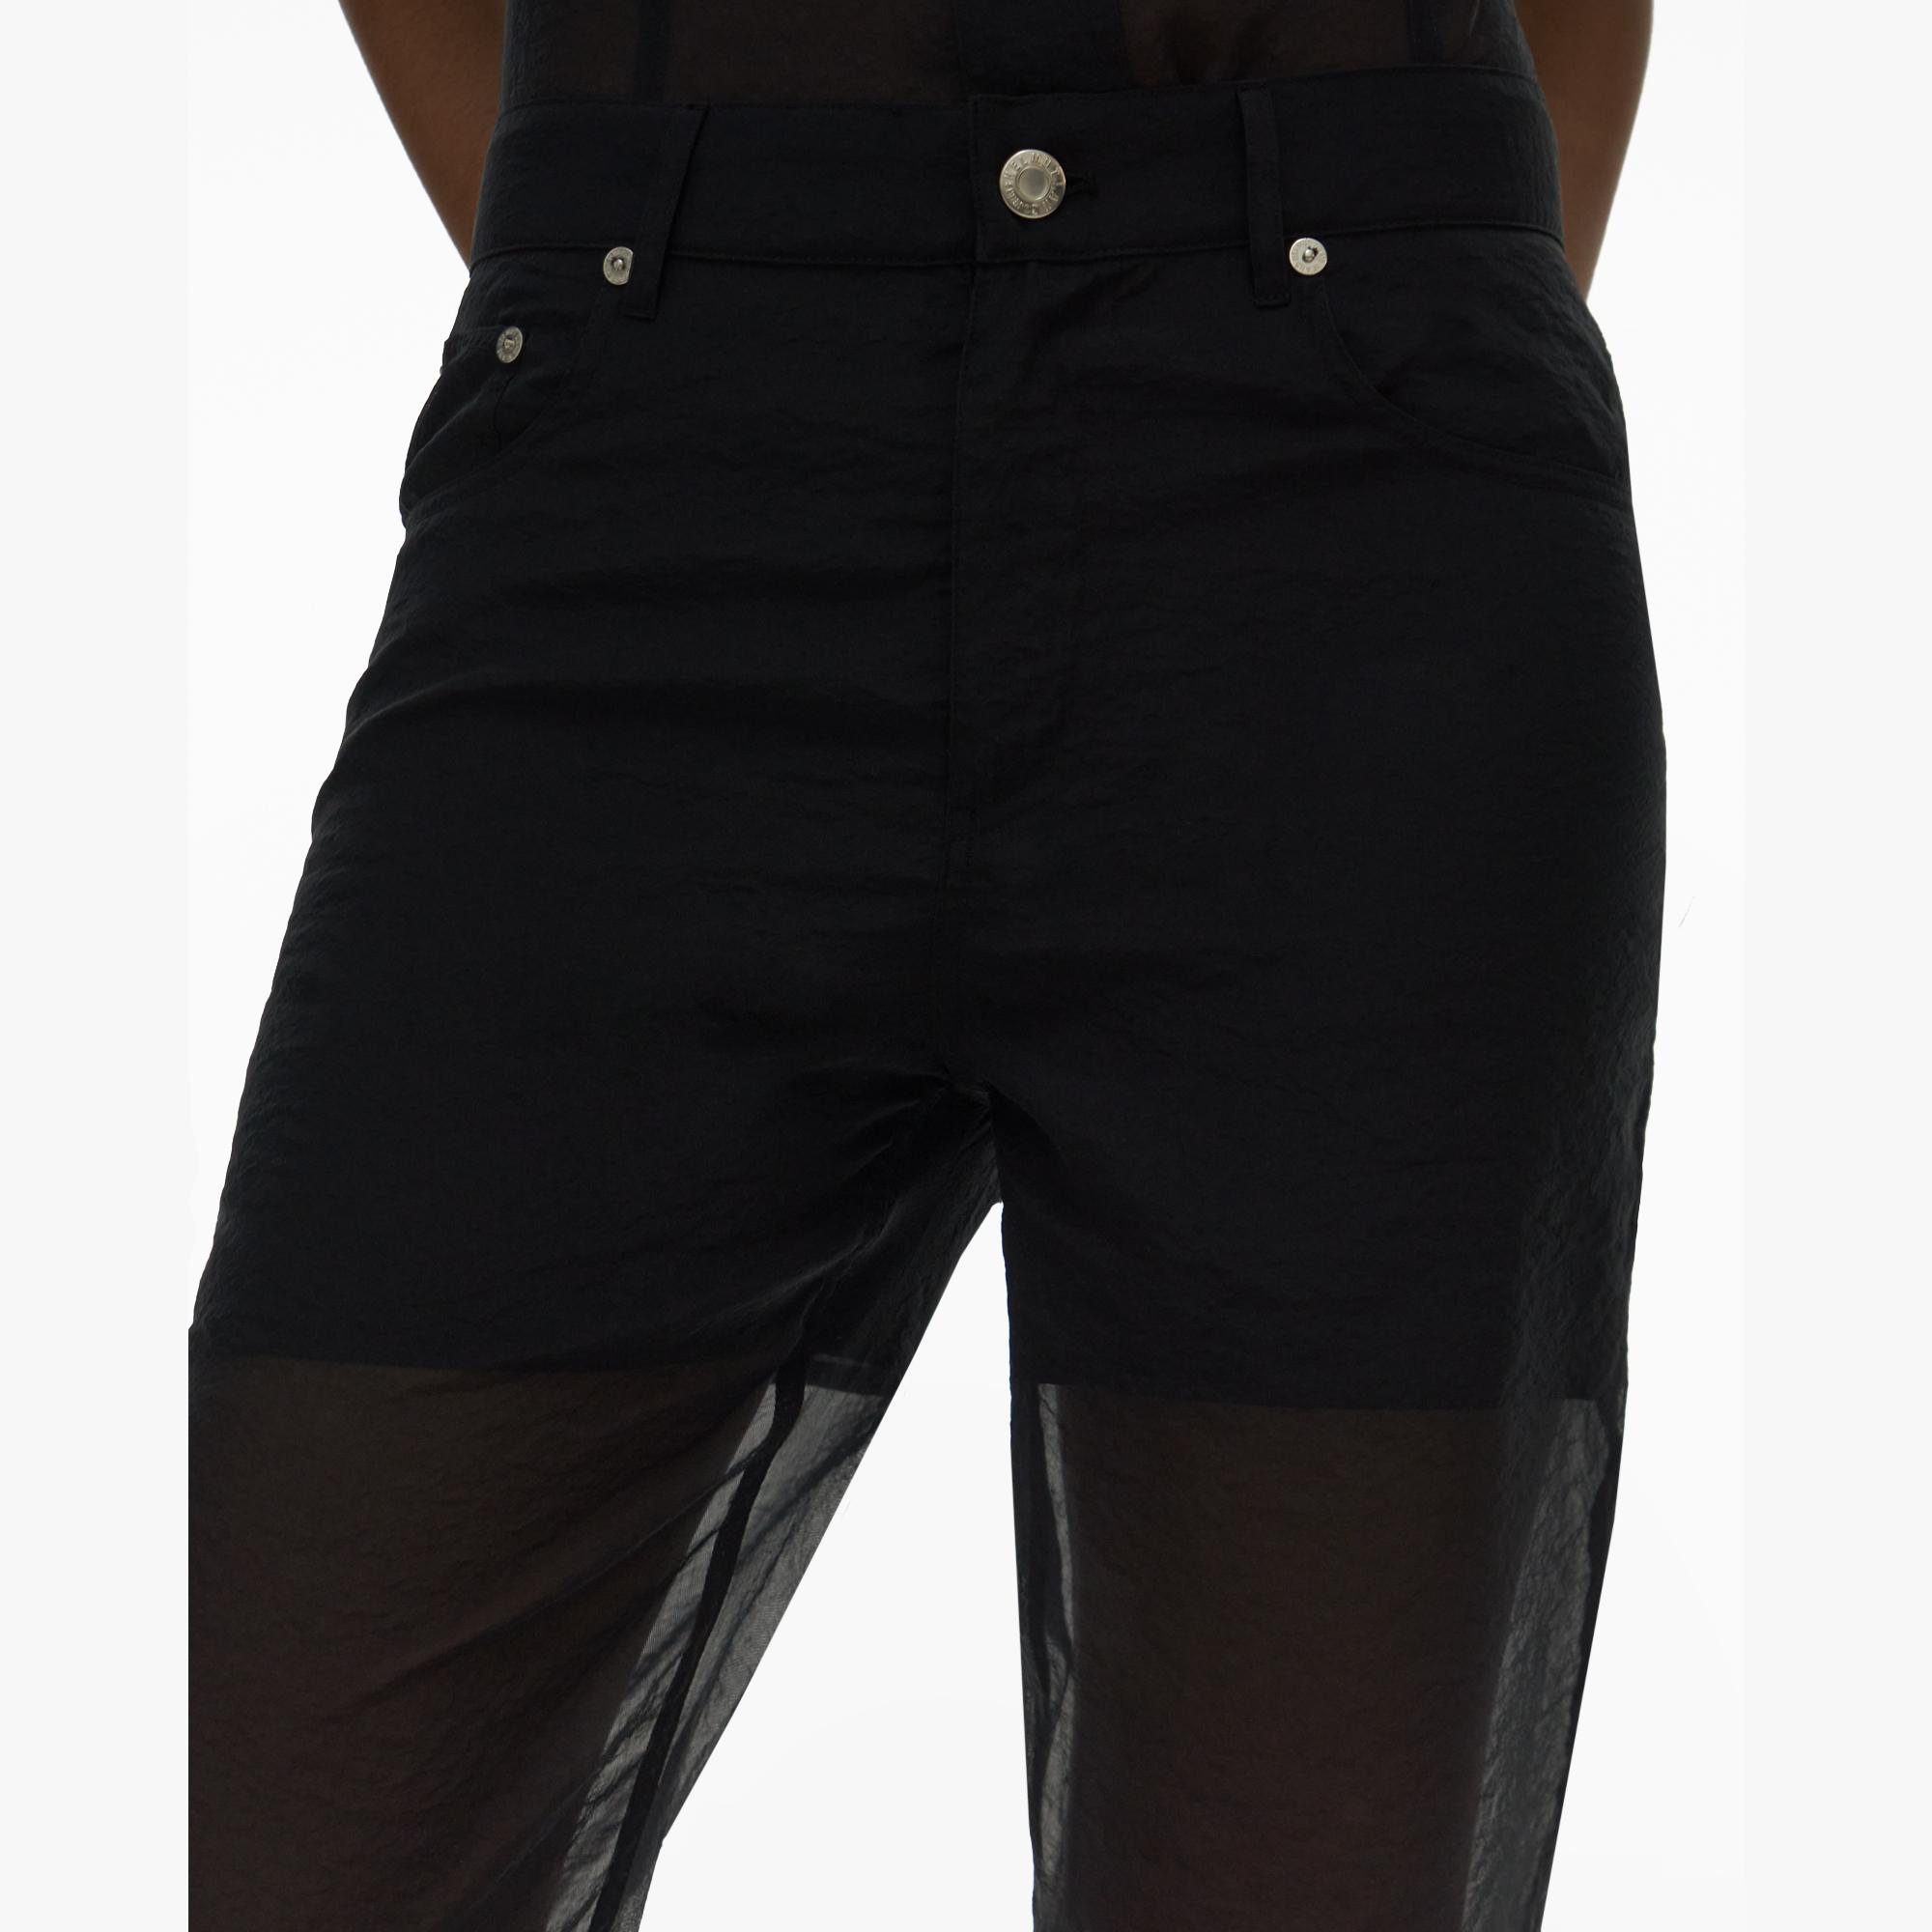 Paneled high-rise bootcut pants in black - Helmut Lang